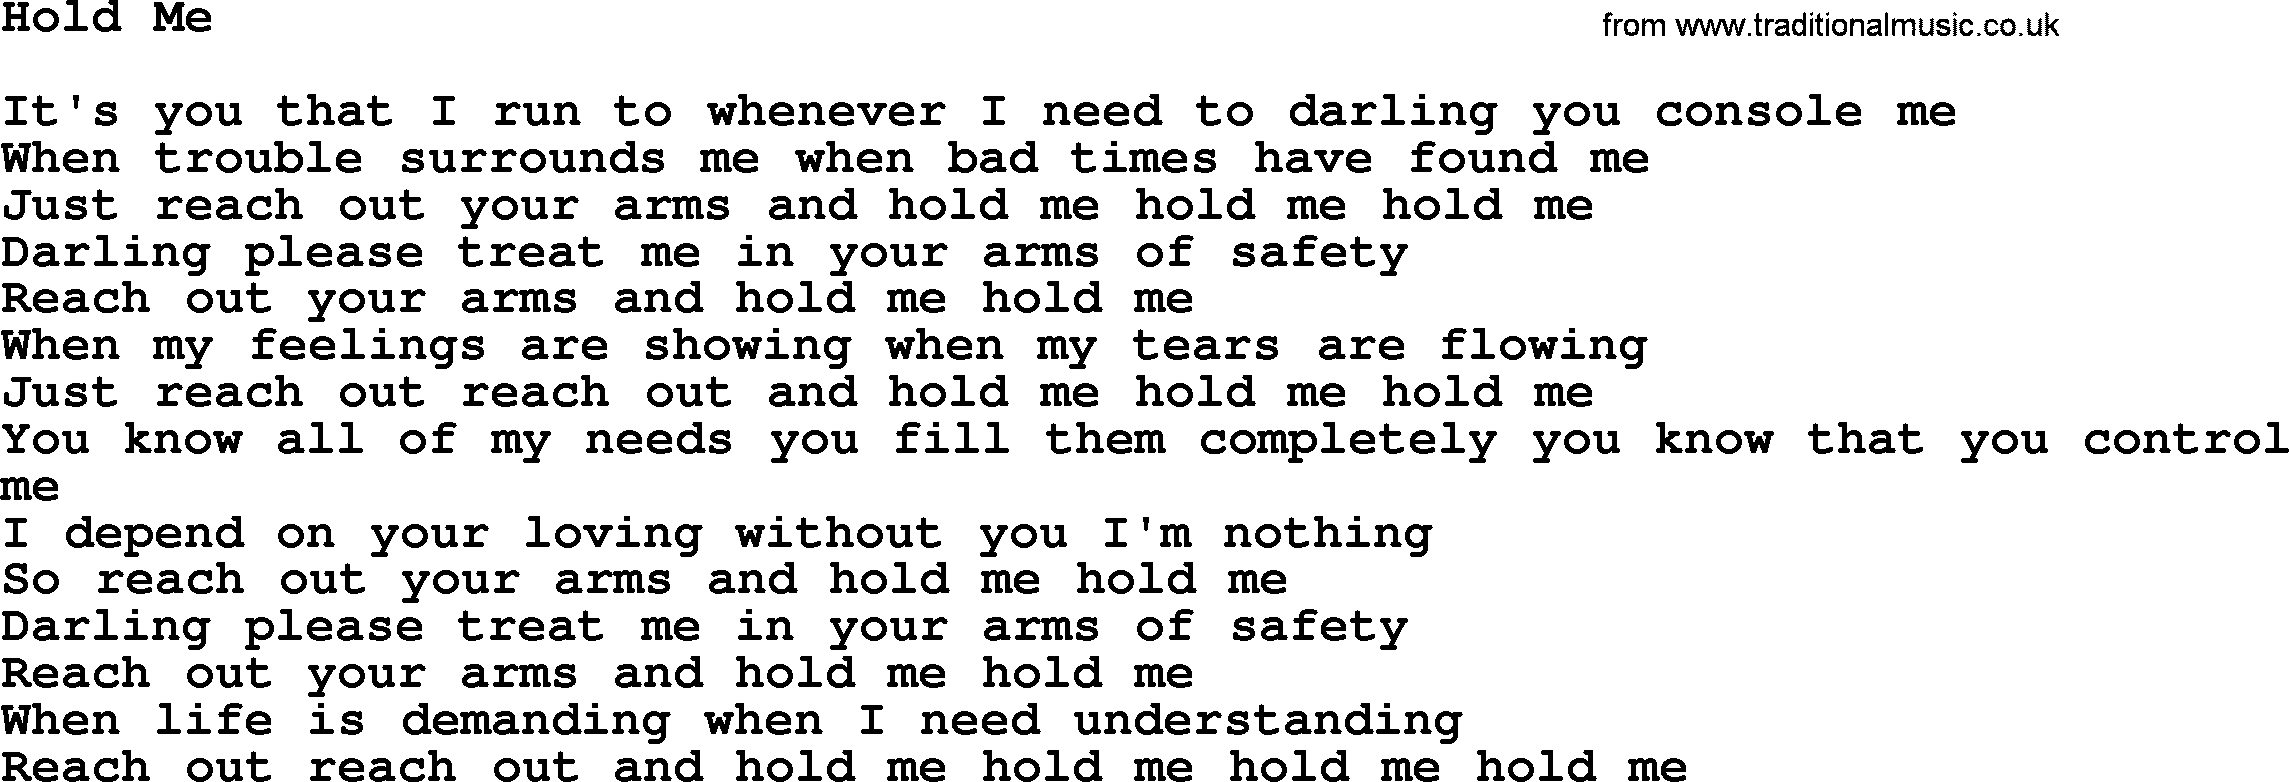 Dolly Parton song Hold Me.txt lyrics